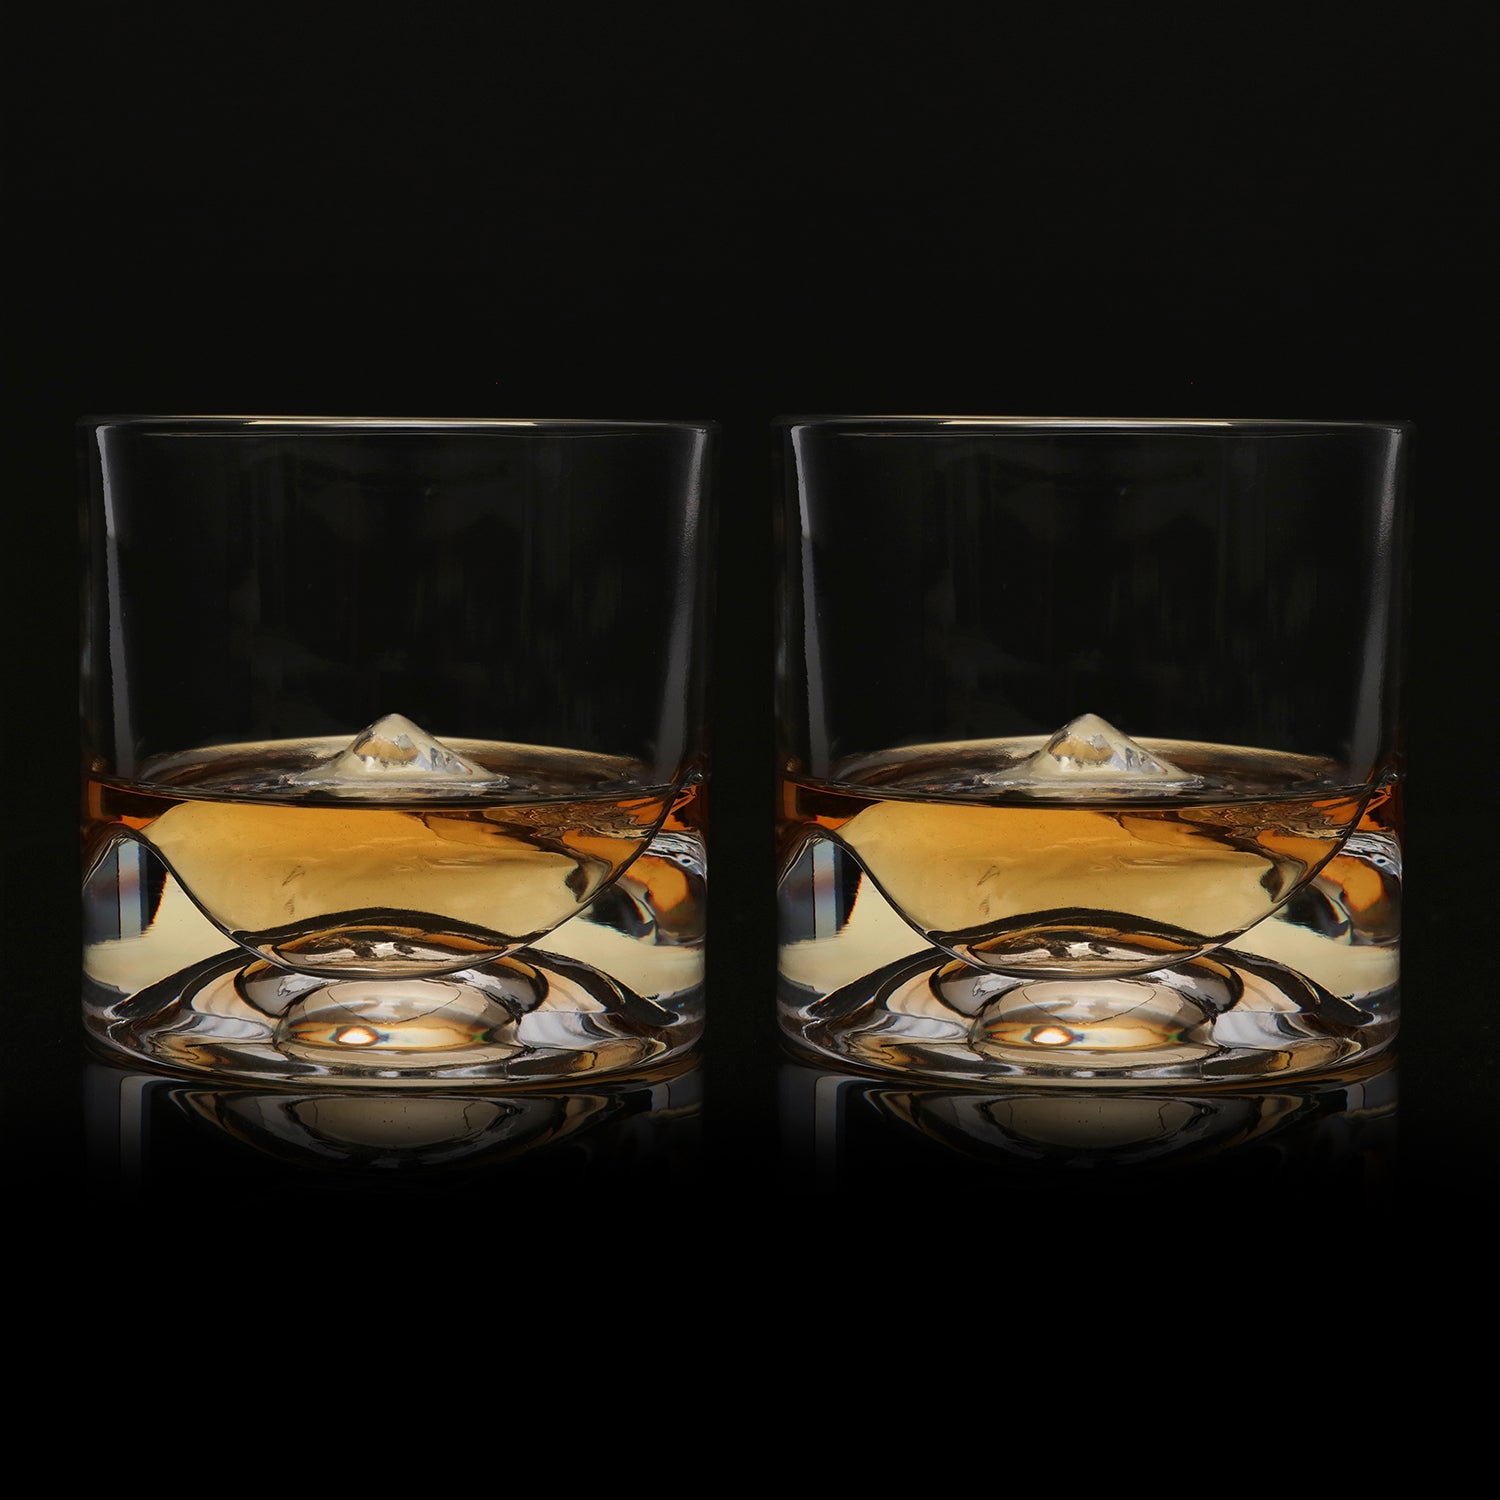 LIITON scenic Whiskey Glasses - Set of 2 - Grand Canyon